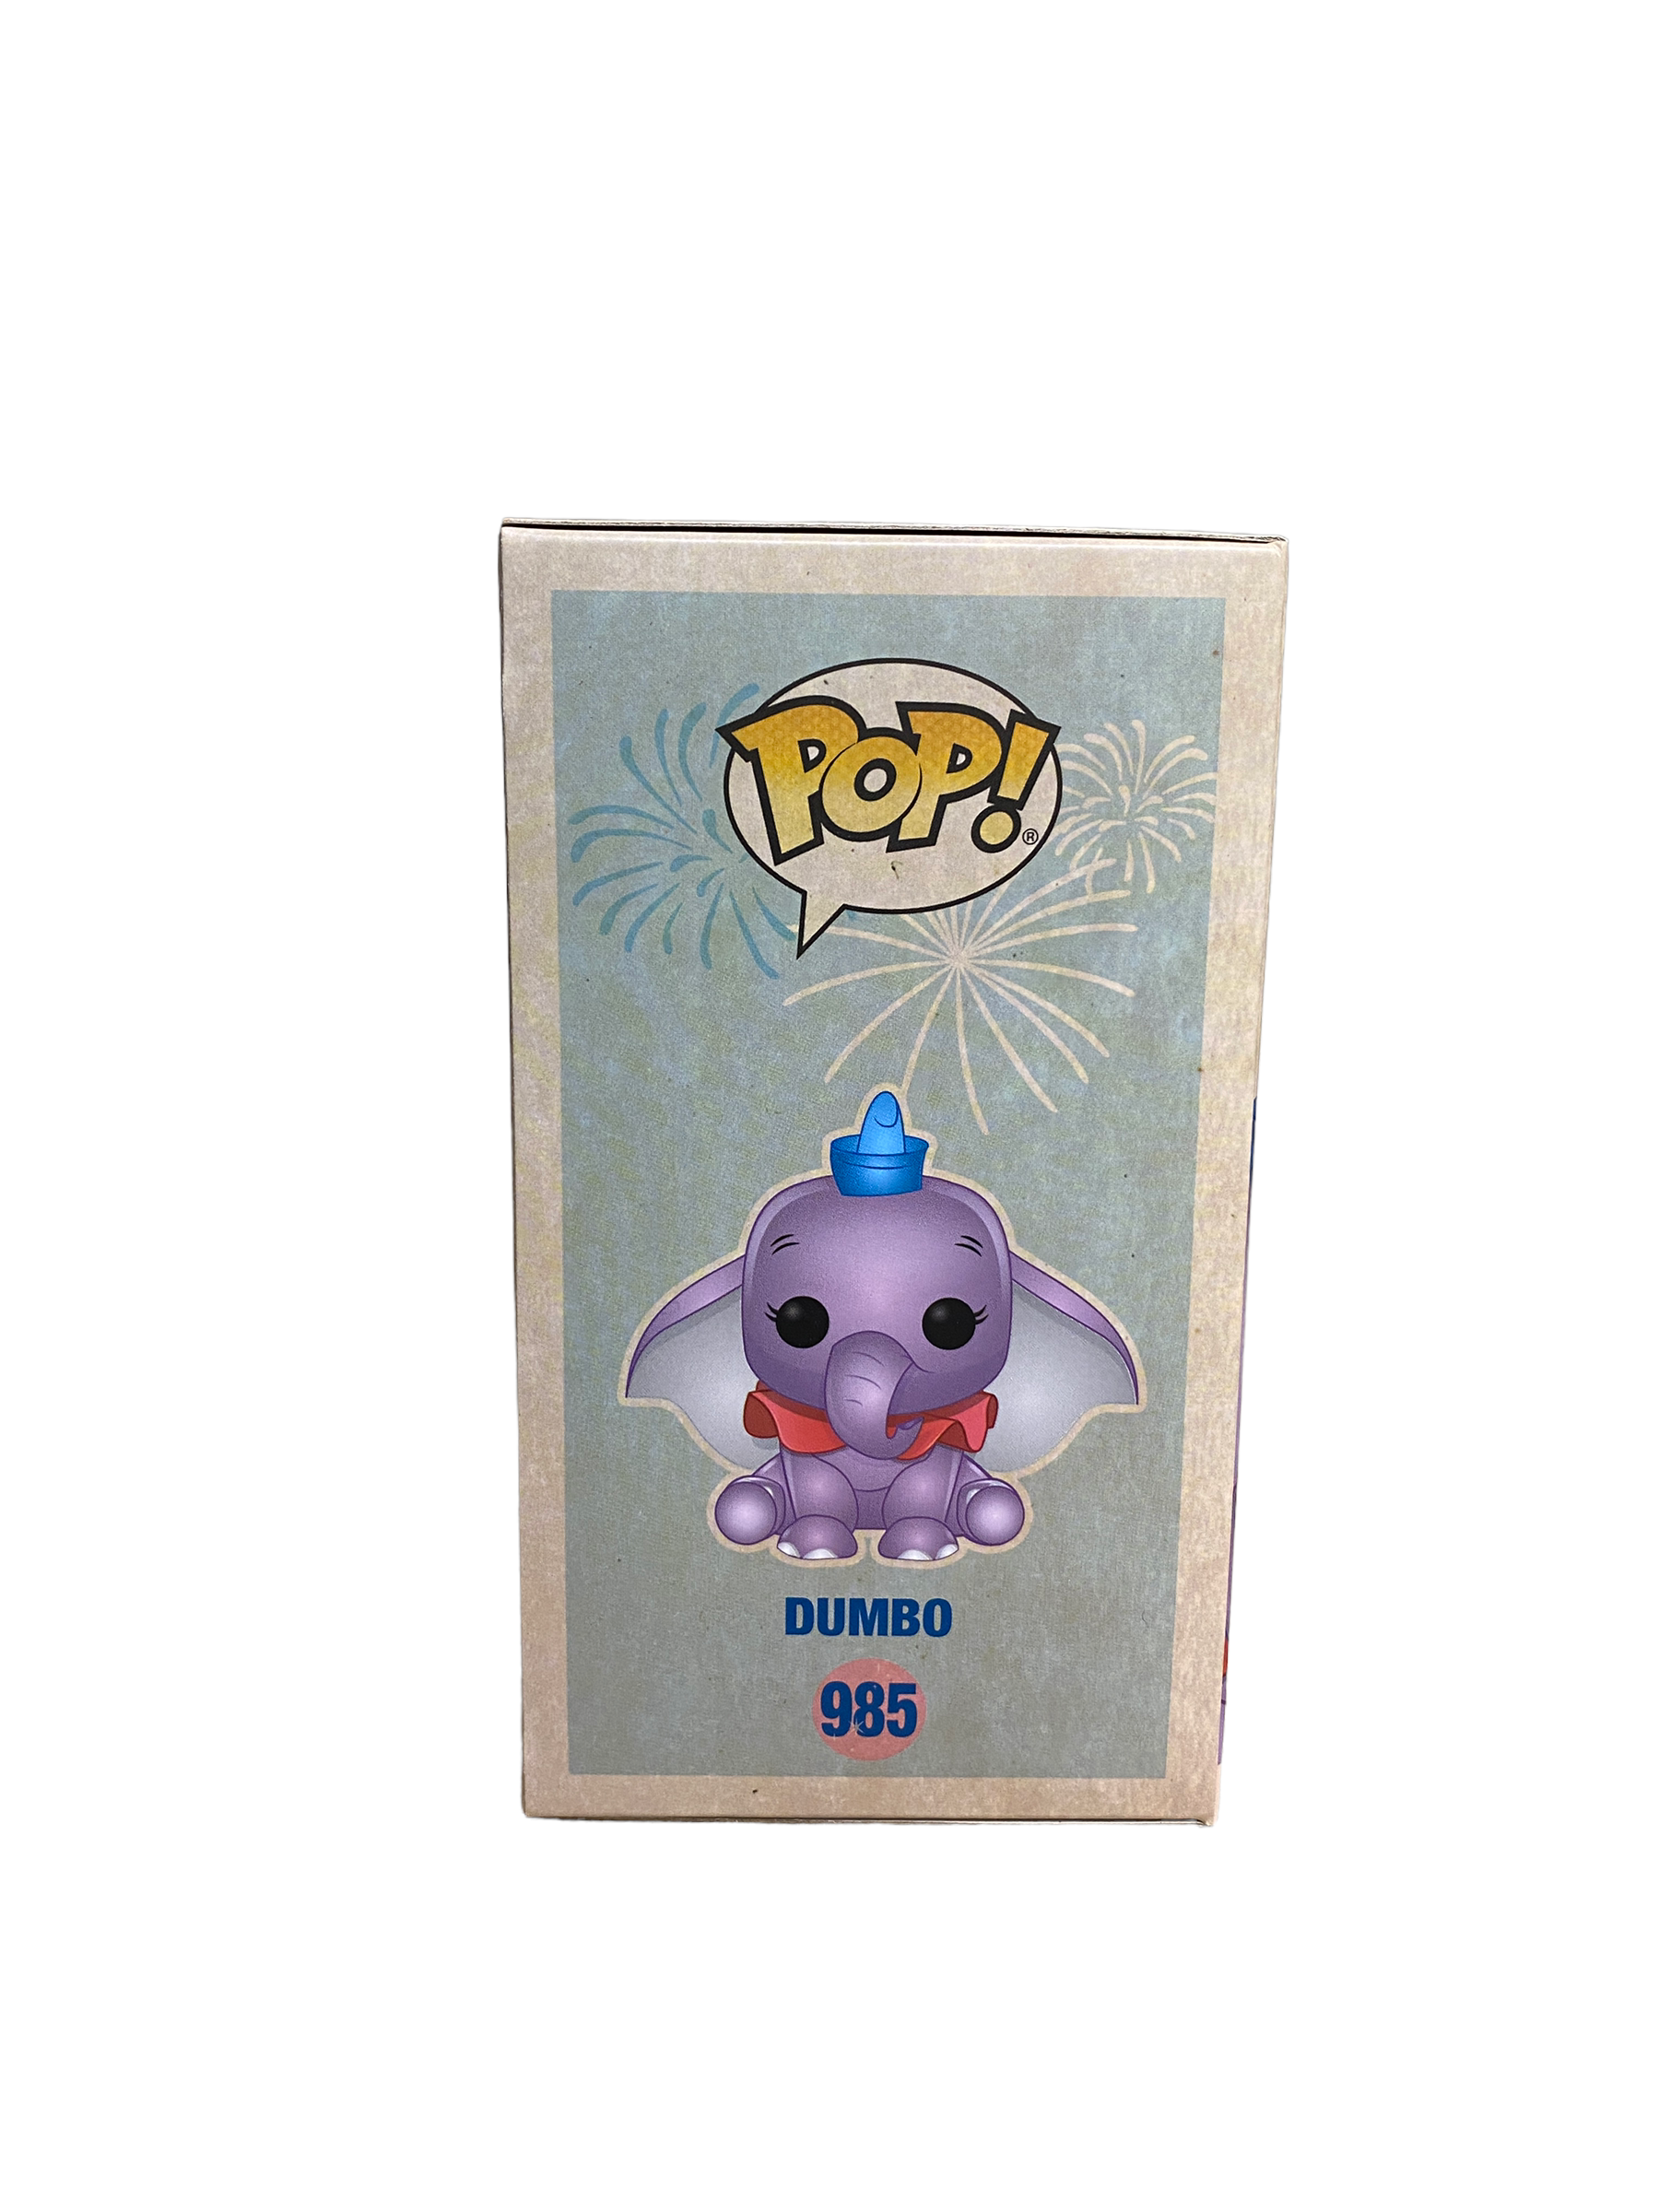 Dumbo #985 (Anniversary) Funko Pop! - Disneyland Resort 65th Anniversary - Funko Shop Exclusive - Condition 9/10